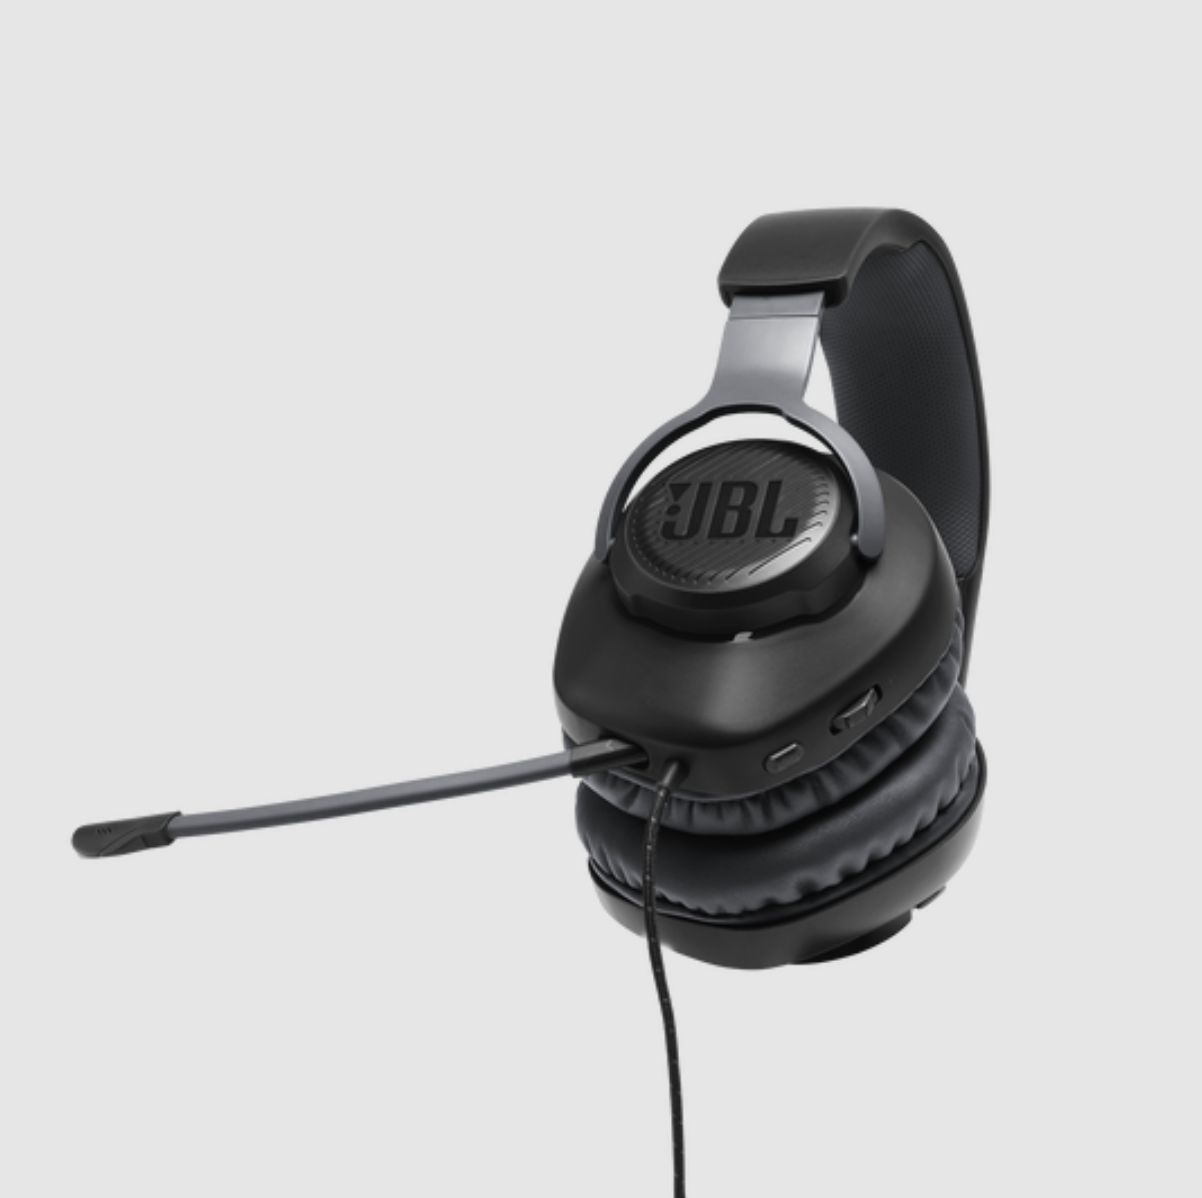 JBL Quantum 100 Gaming Over-Ear Headset - Black